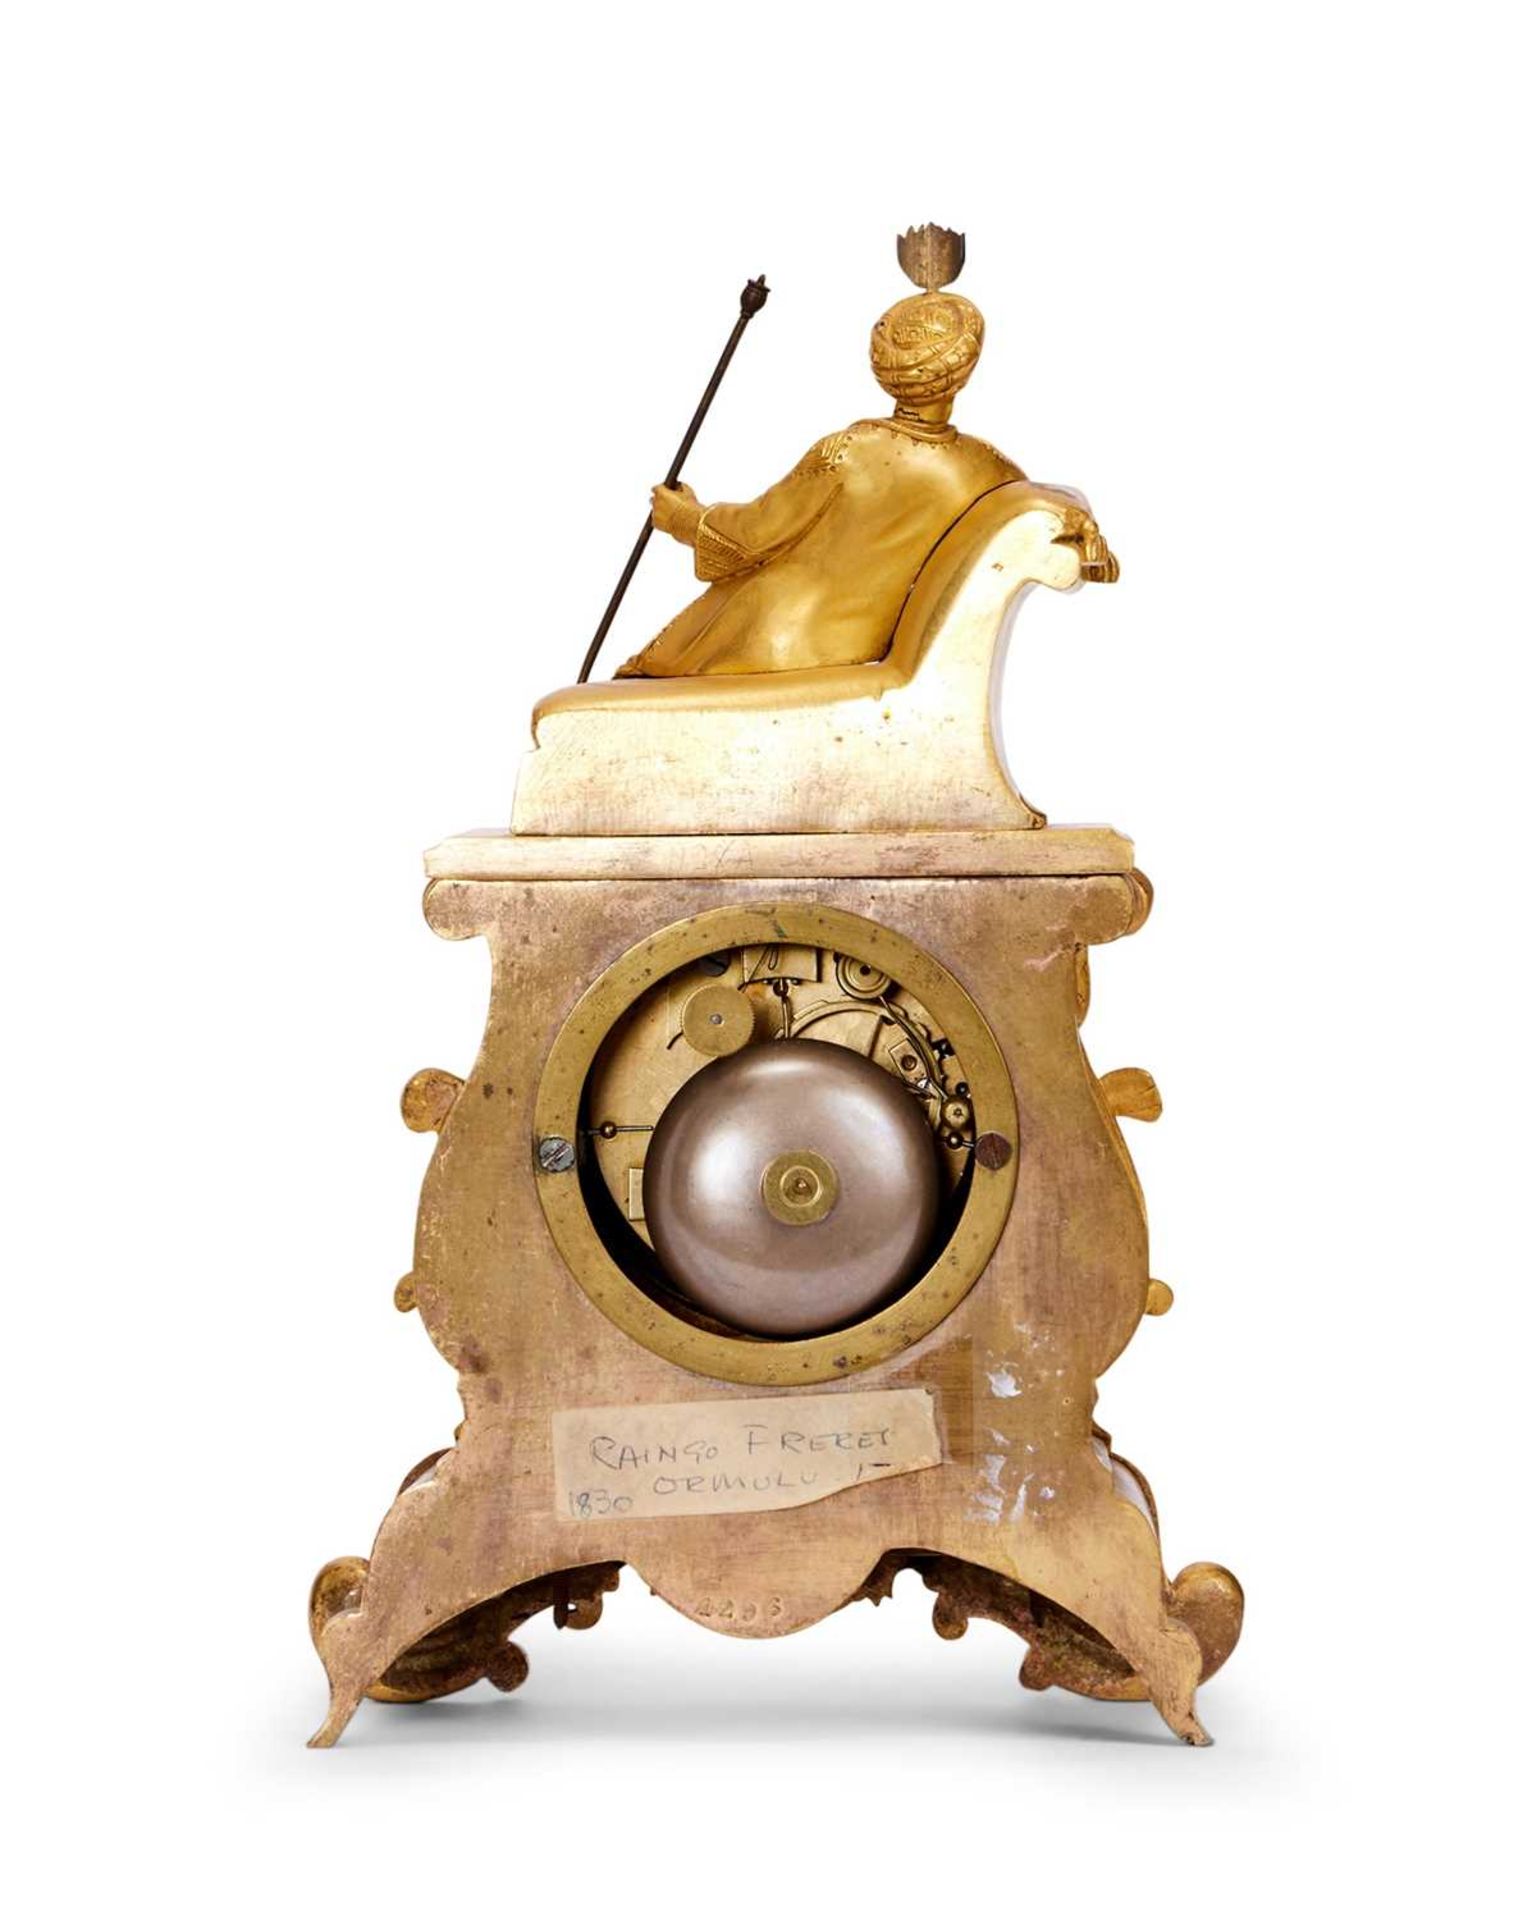 RAINGO FRERES, PARIS: AN 1830'S FRENCH ORIENTALIST GILT BRONZE CLOCK DEPICTING A SULTAN - Image 2 of 3